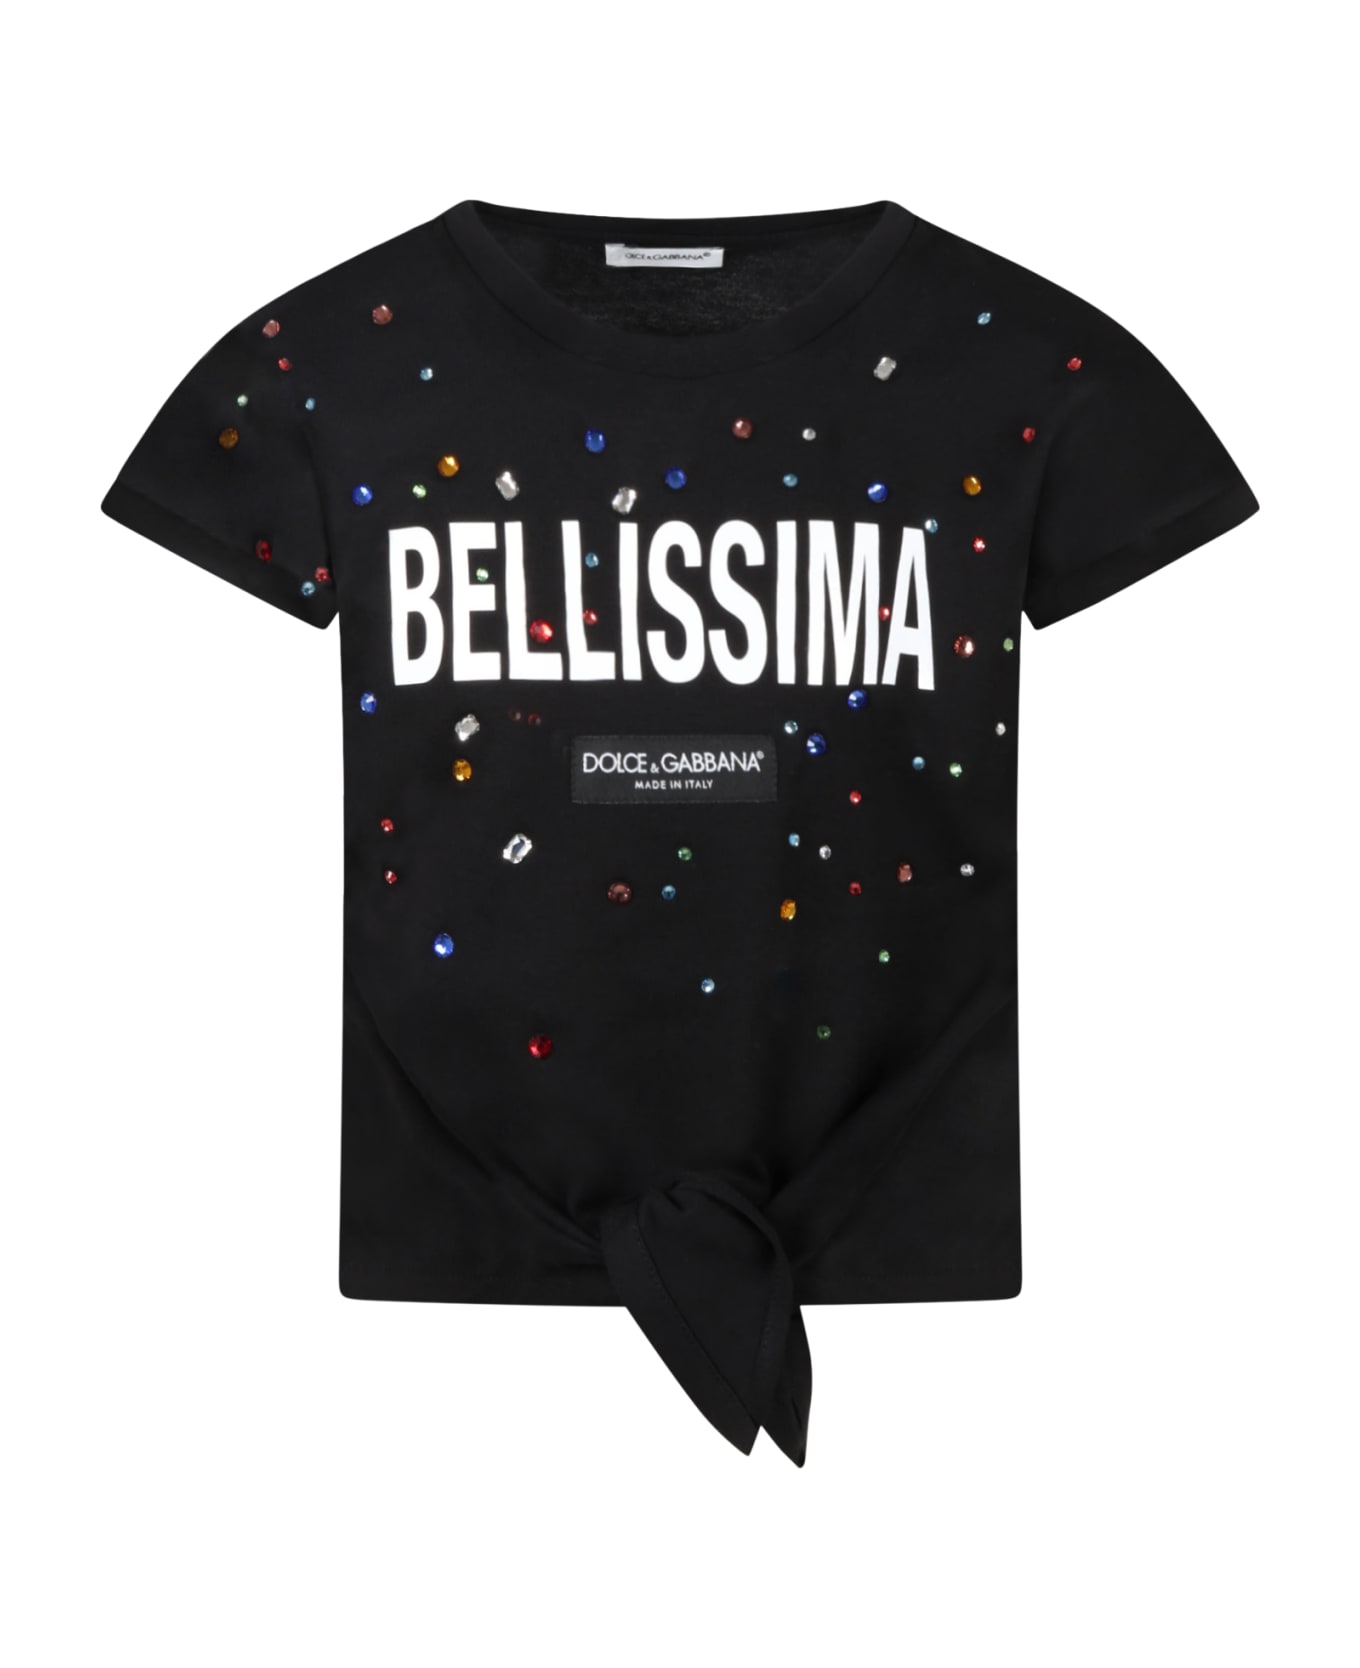 Dolce & Gabbana Black T-shirt For Girl With Rhinestones - Black